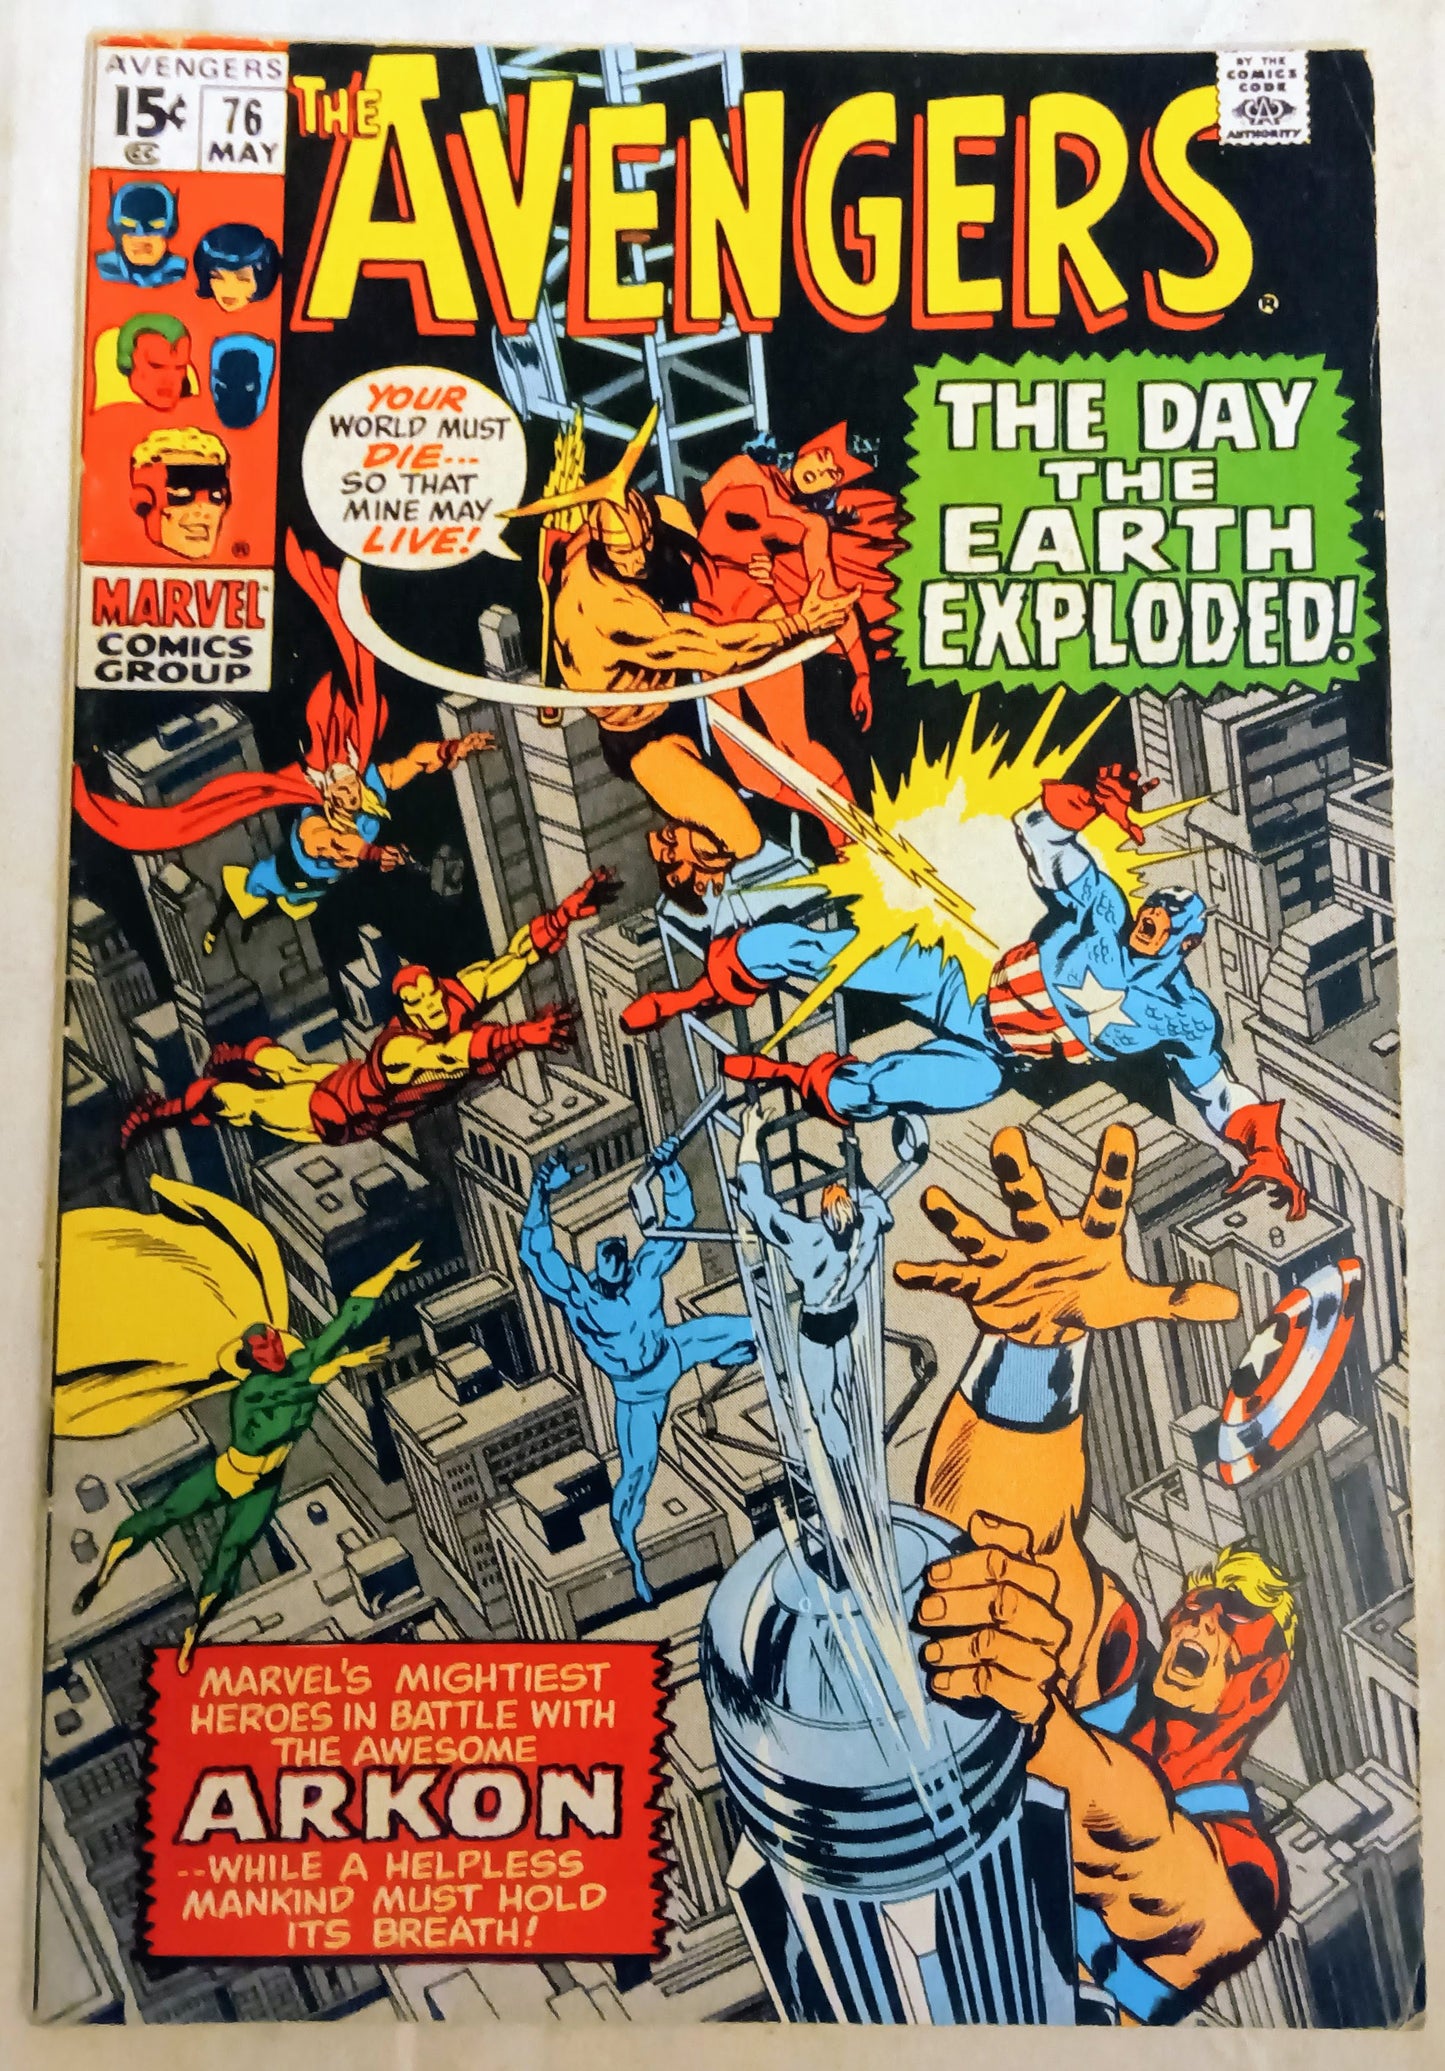 Avengers #076, Marvel Comics (May 1970)